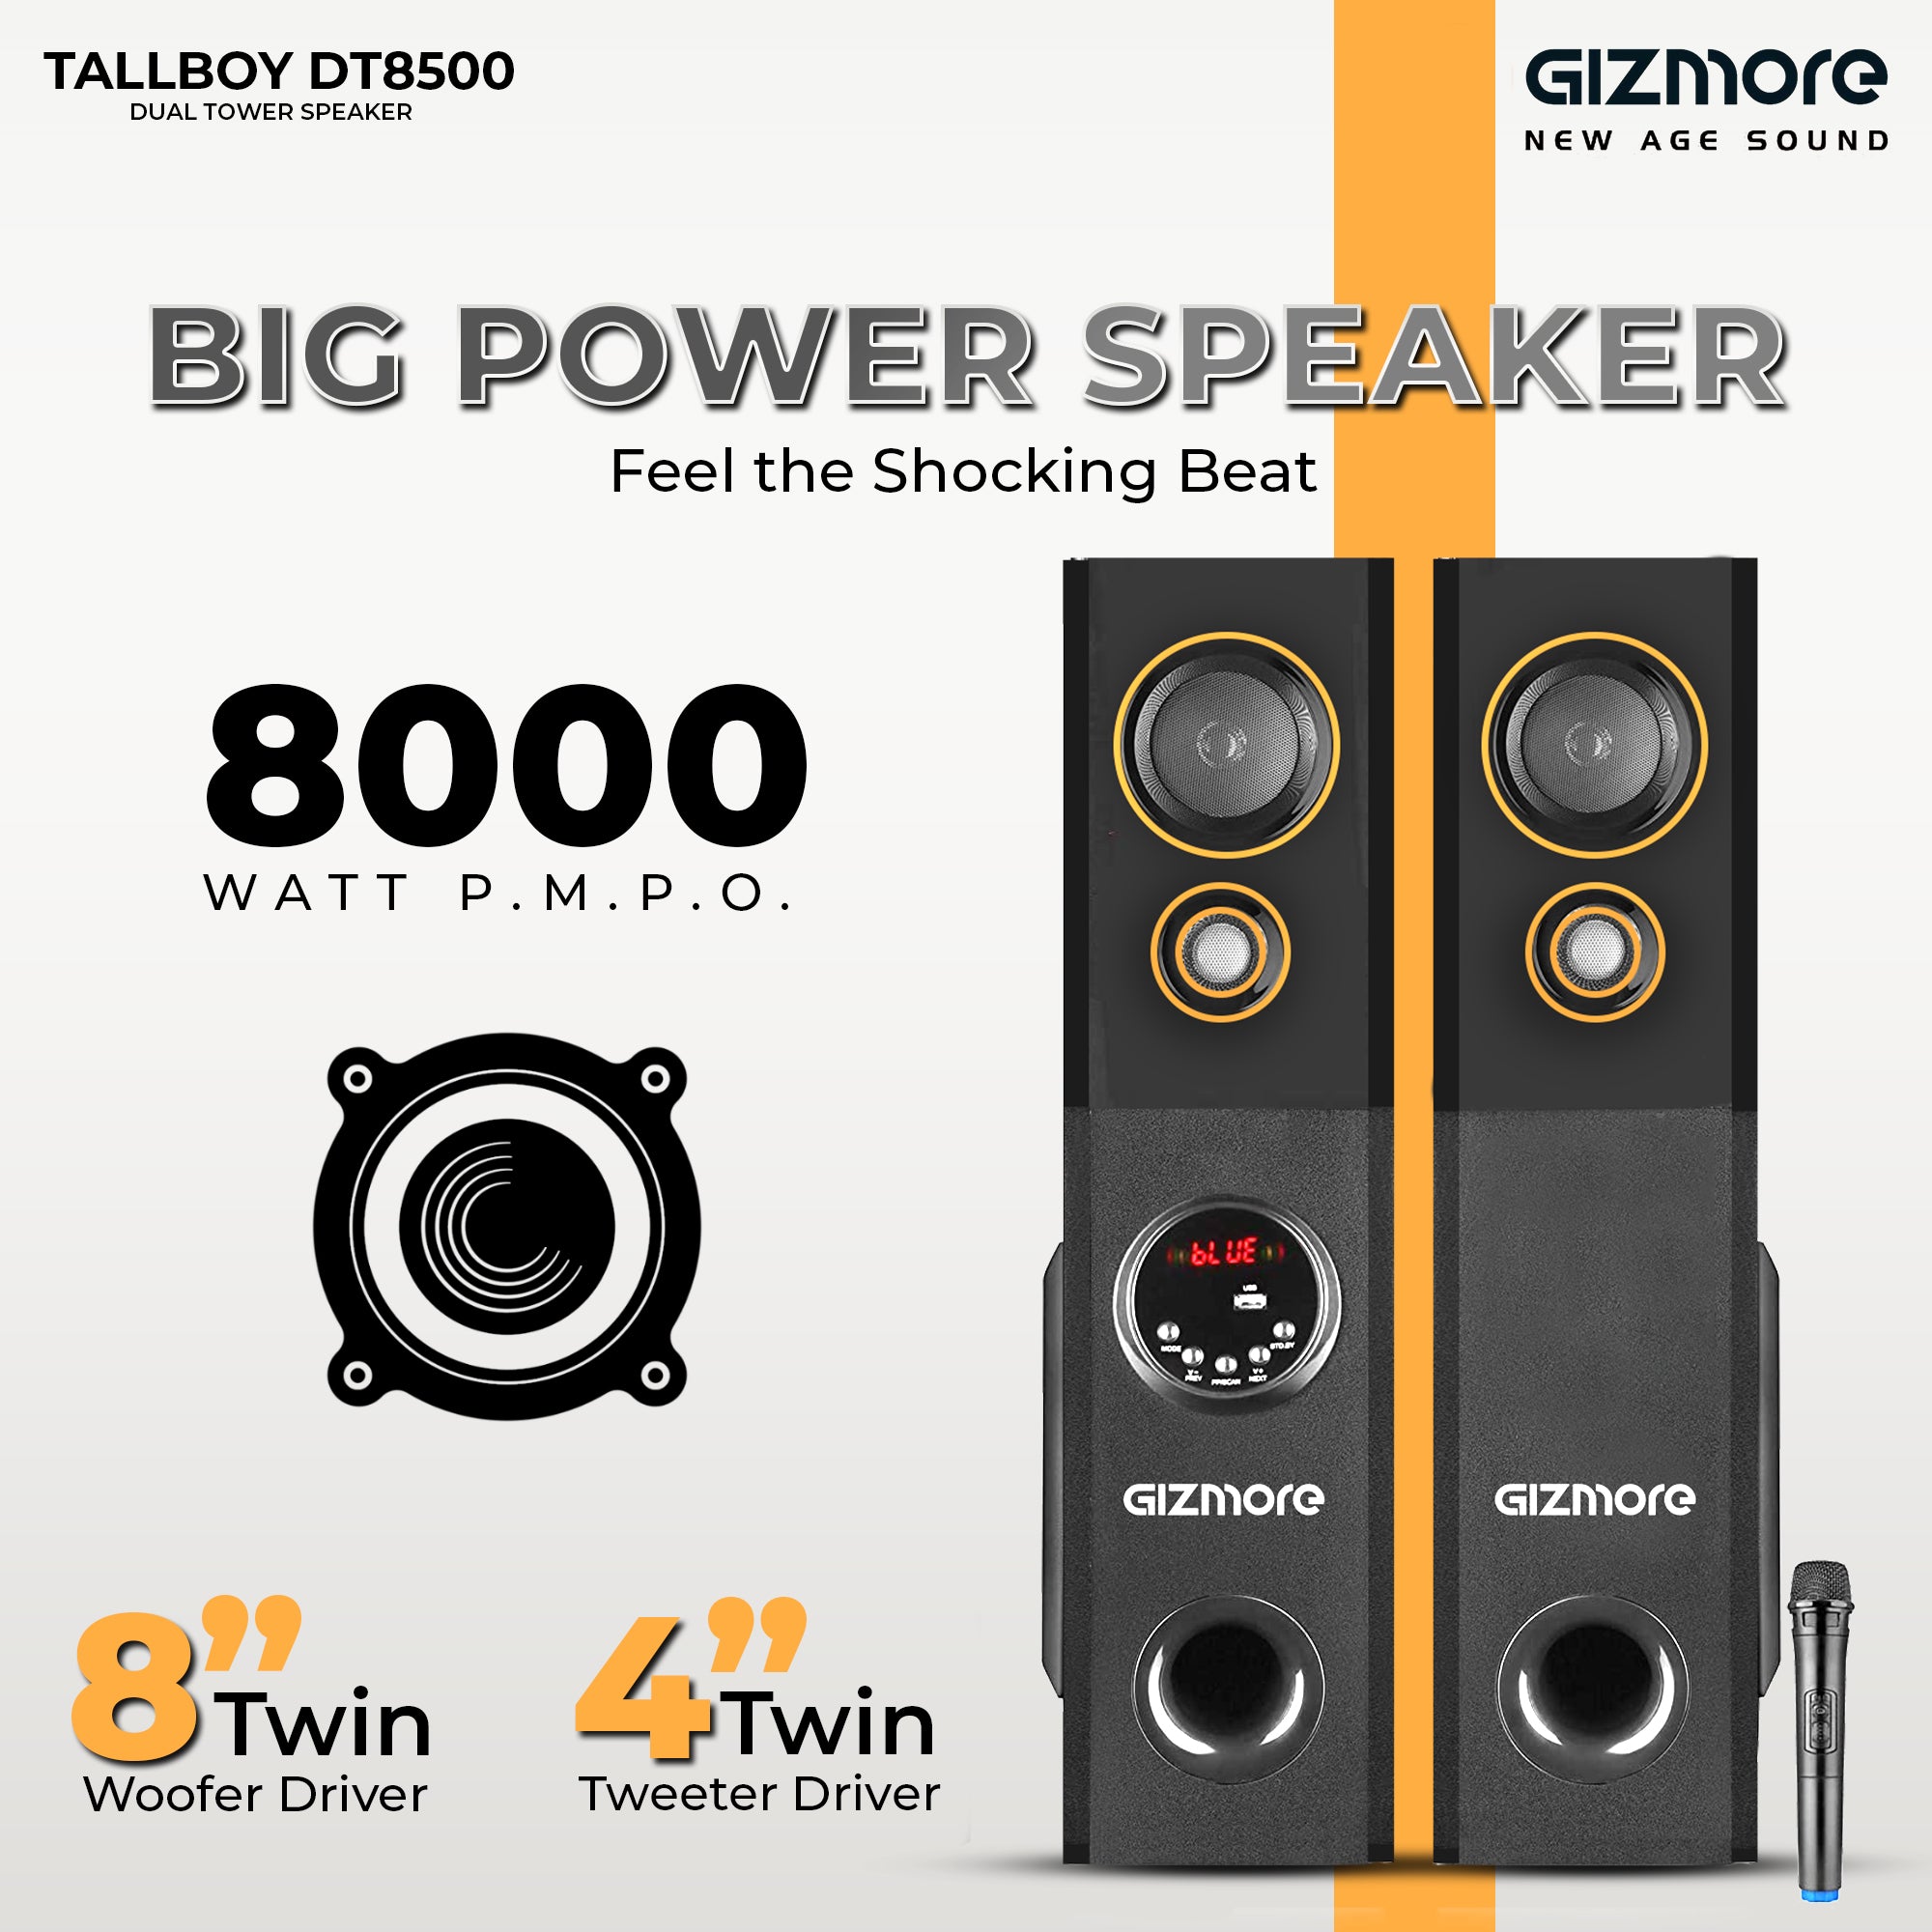 GIZMORE GIZ Tallboy DT8500 80 Watt Wireless Bluetooth Multimedia Dual Tower Speaker | Echo Sound Control |Full Control Remote | Led Display, USB, FM Party Speaker Home Theater Karaoke Support (Black)